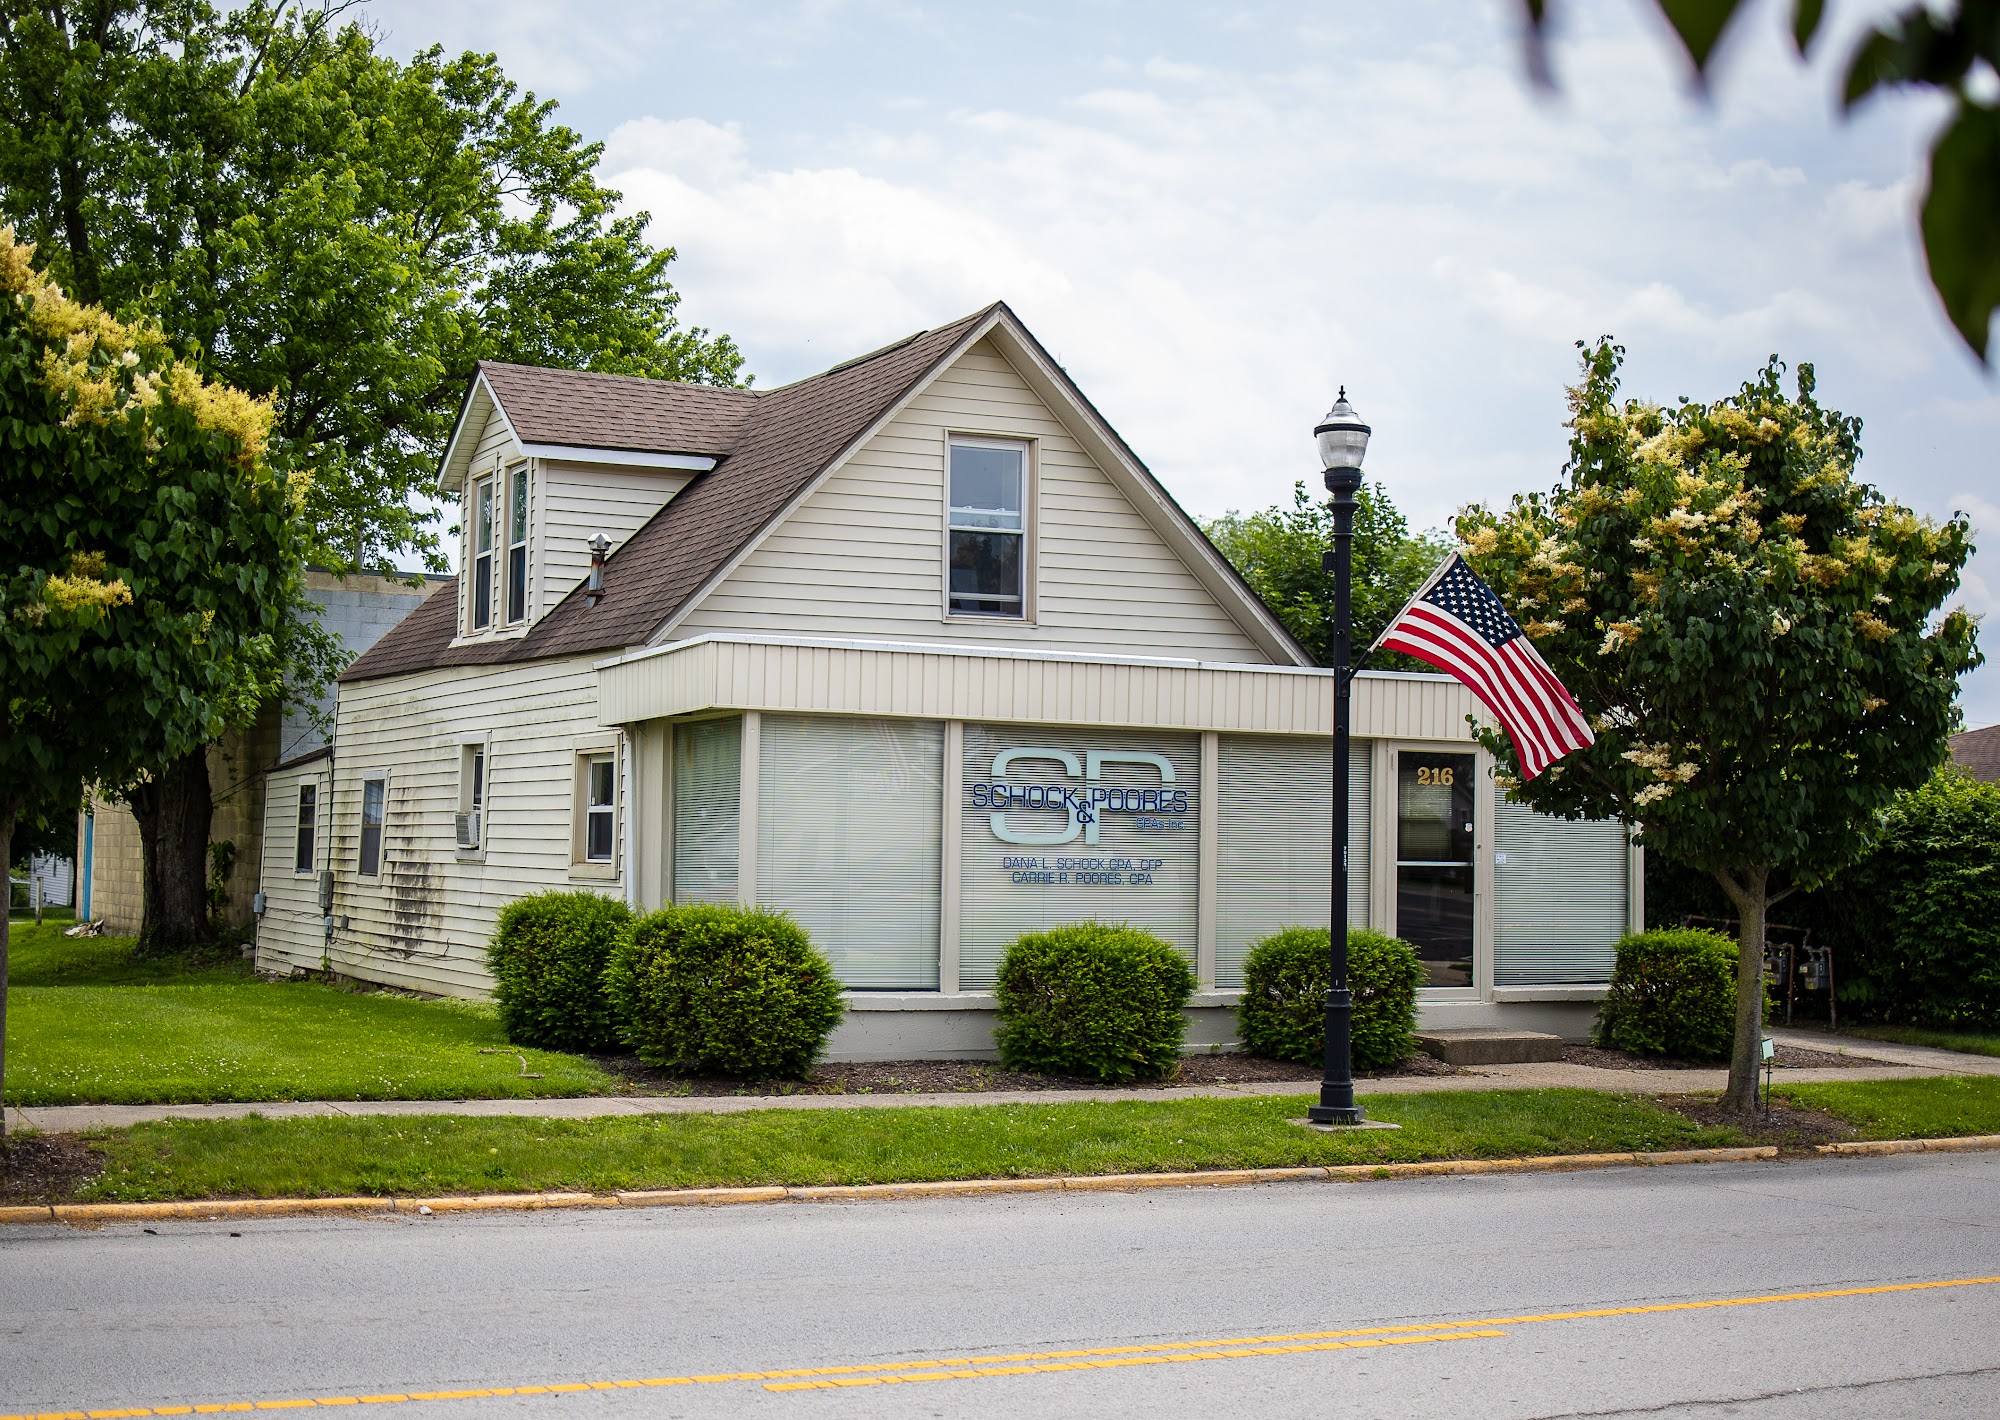 Schock & Poores Inc 216 N Main St, New Carlisle Ohio 45344